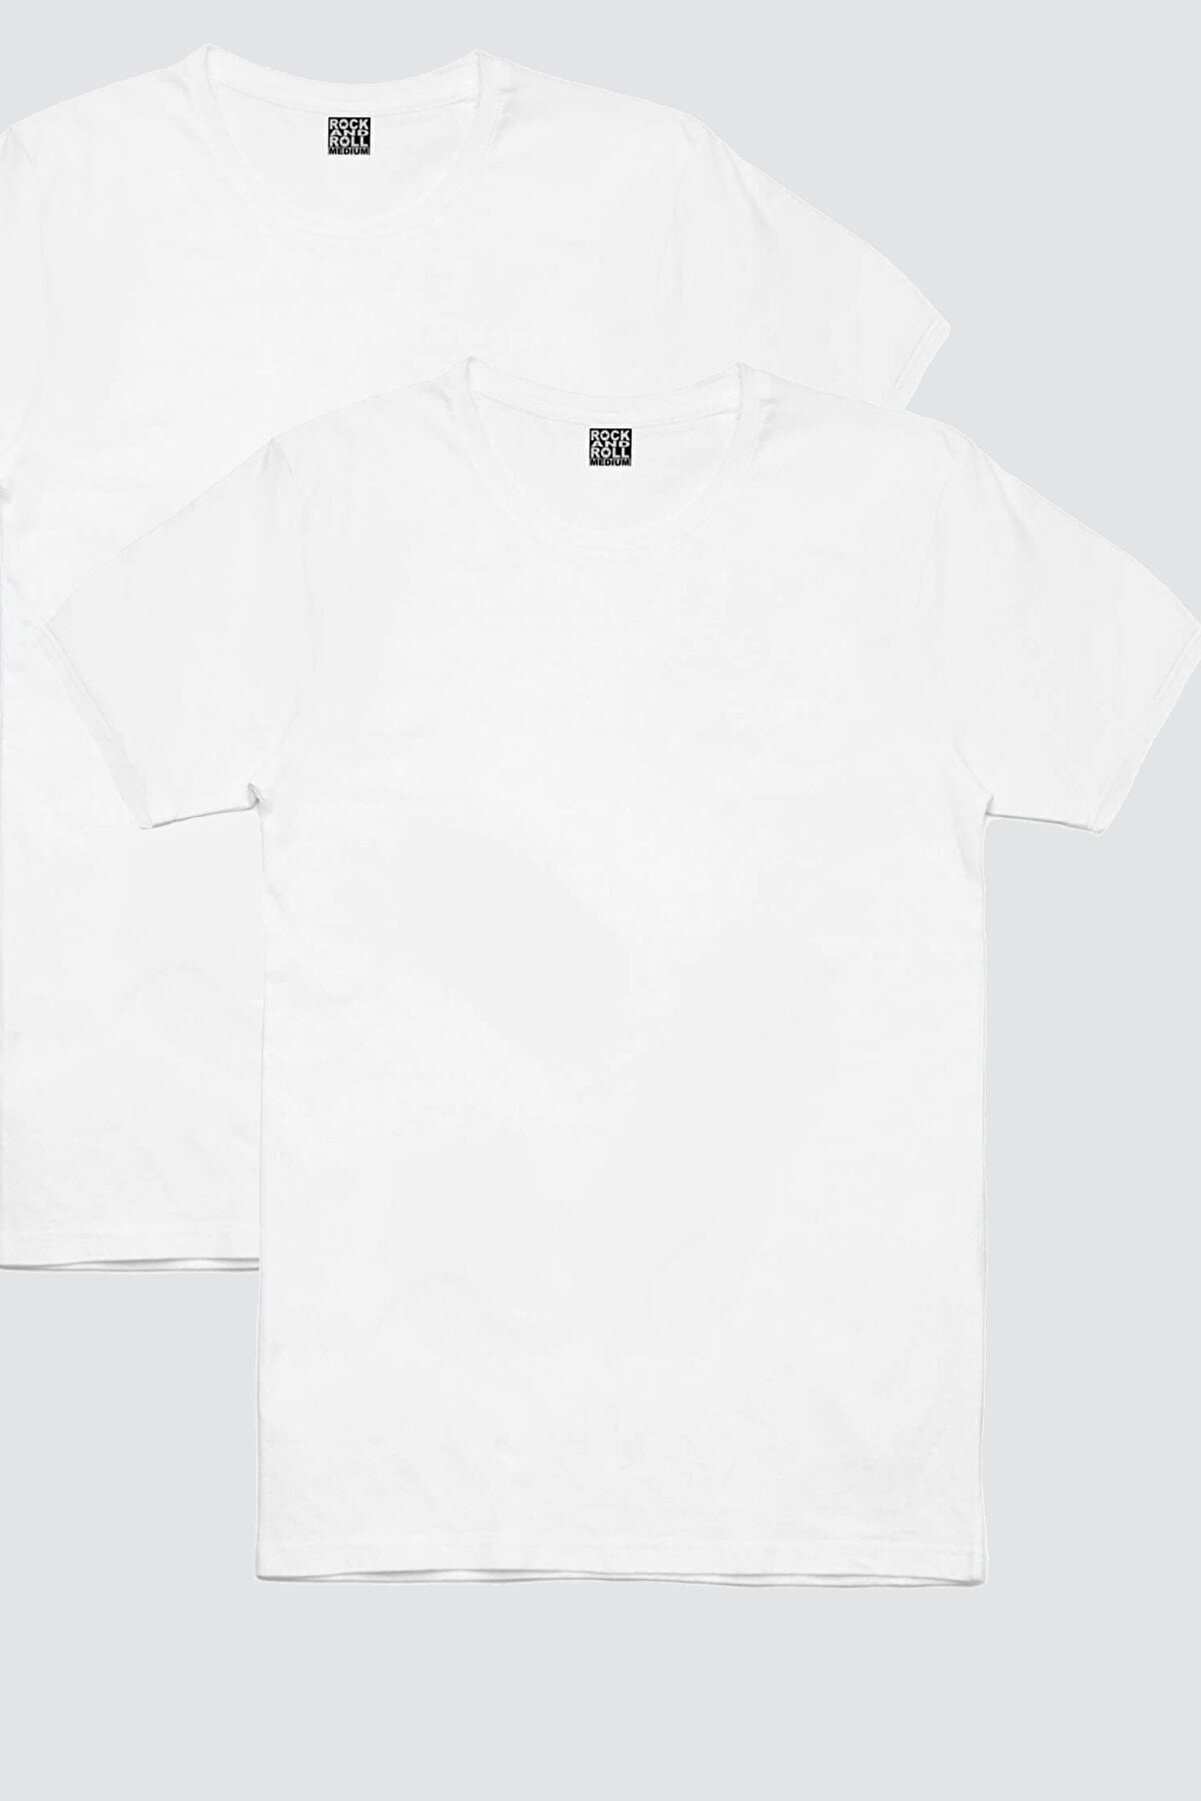 Düz, Baskısız Beyaz T-shirt Erkek 2'li Eko Paket